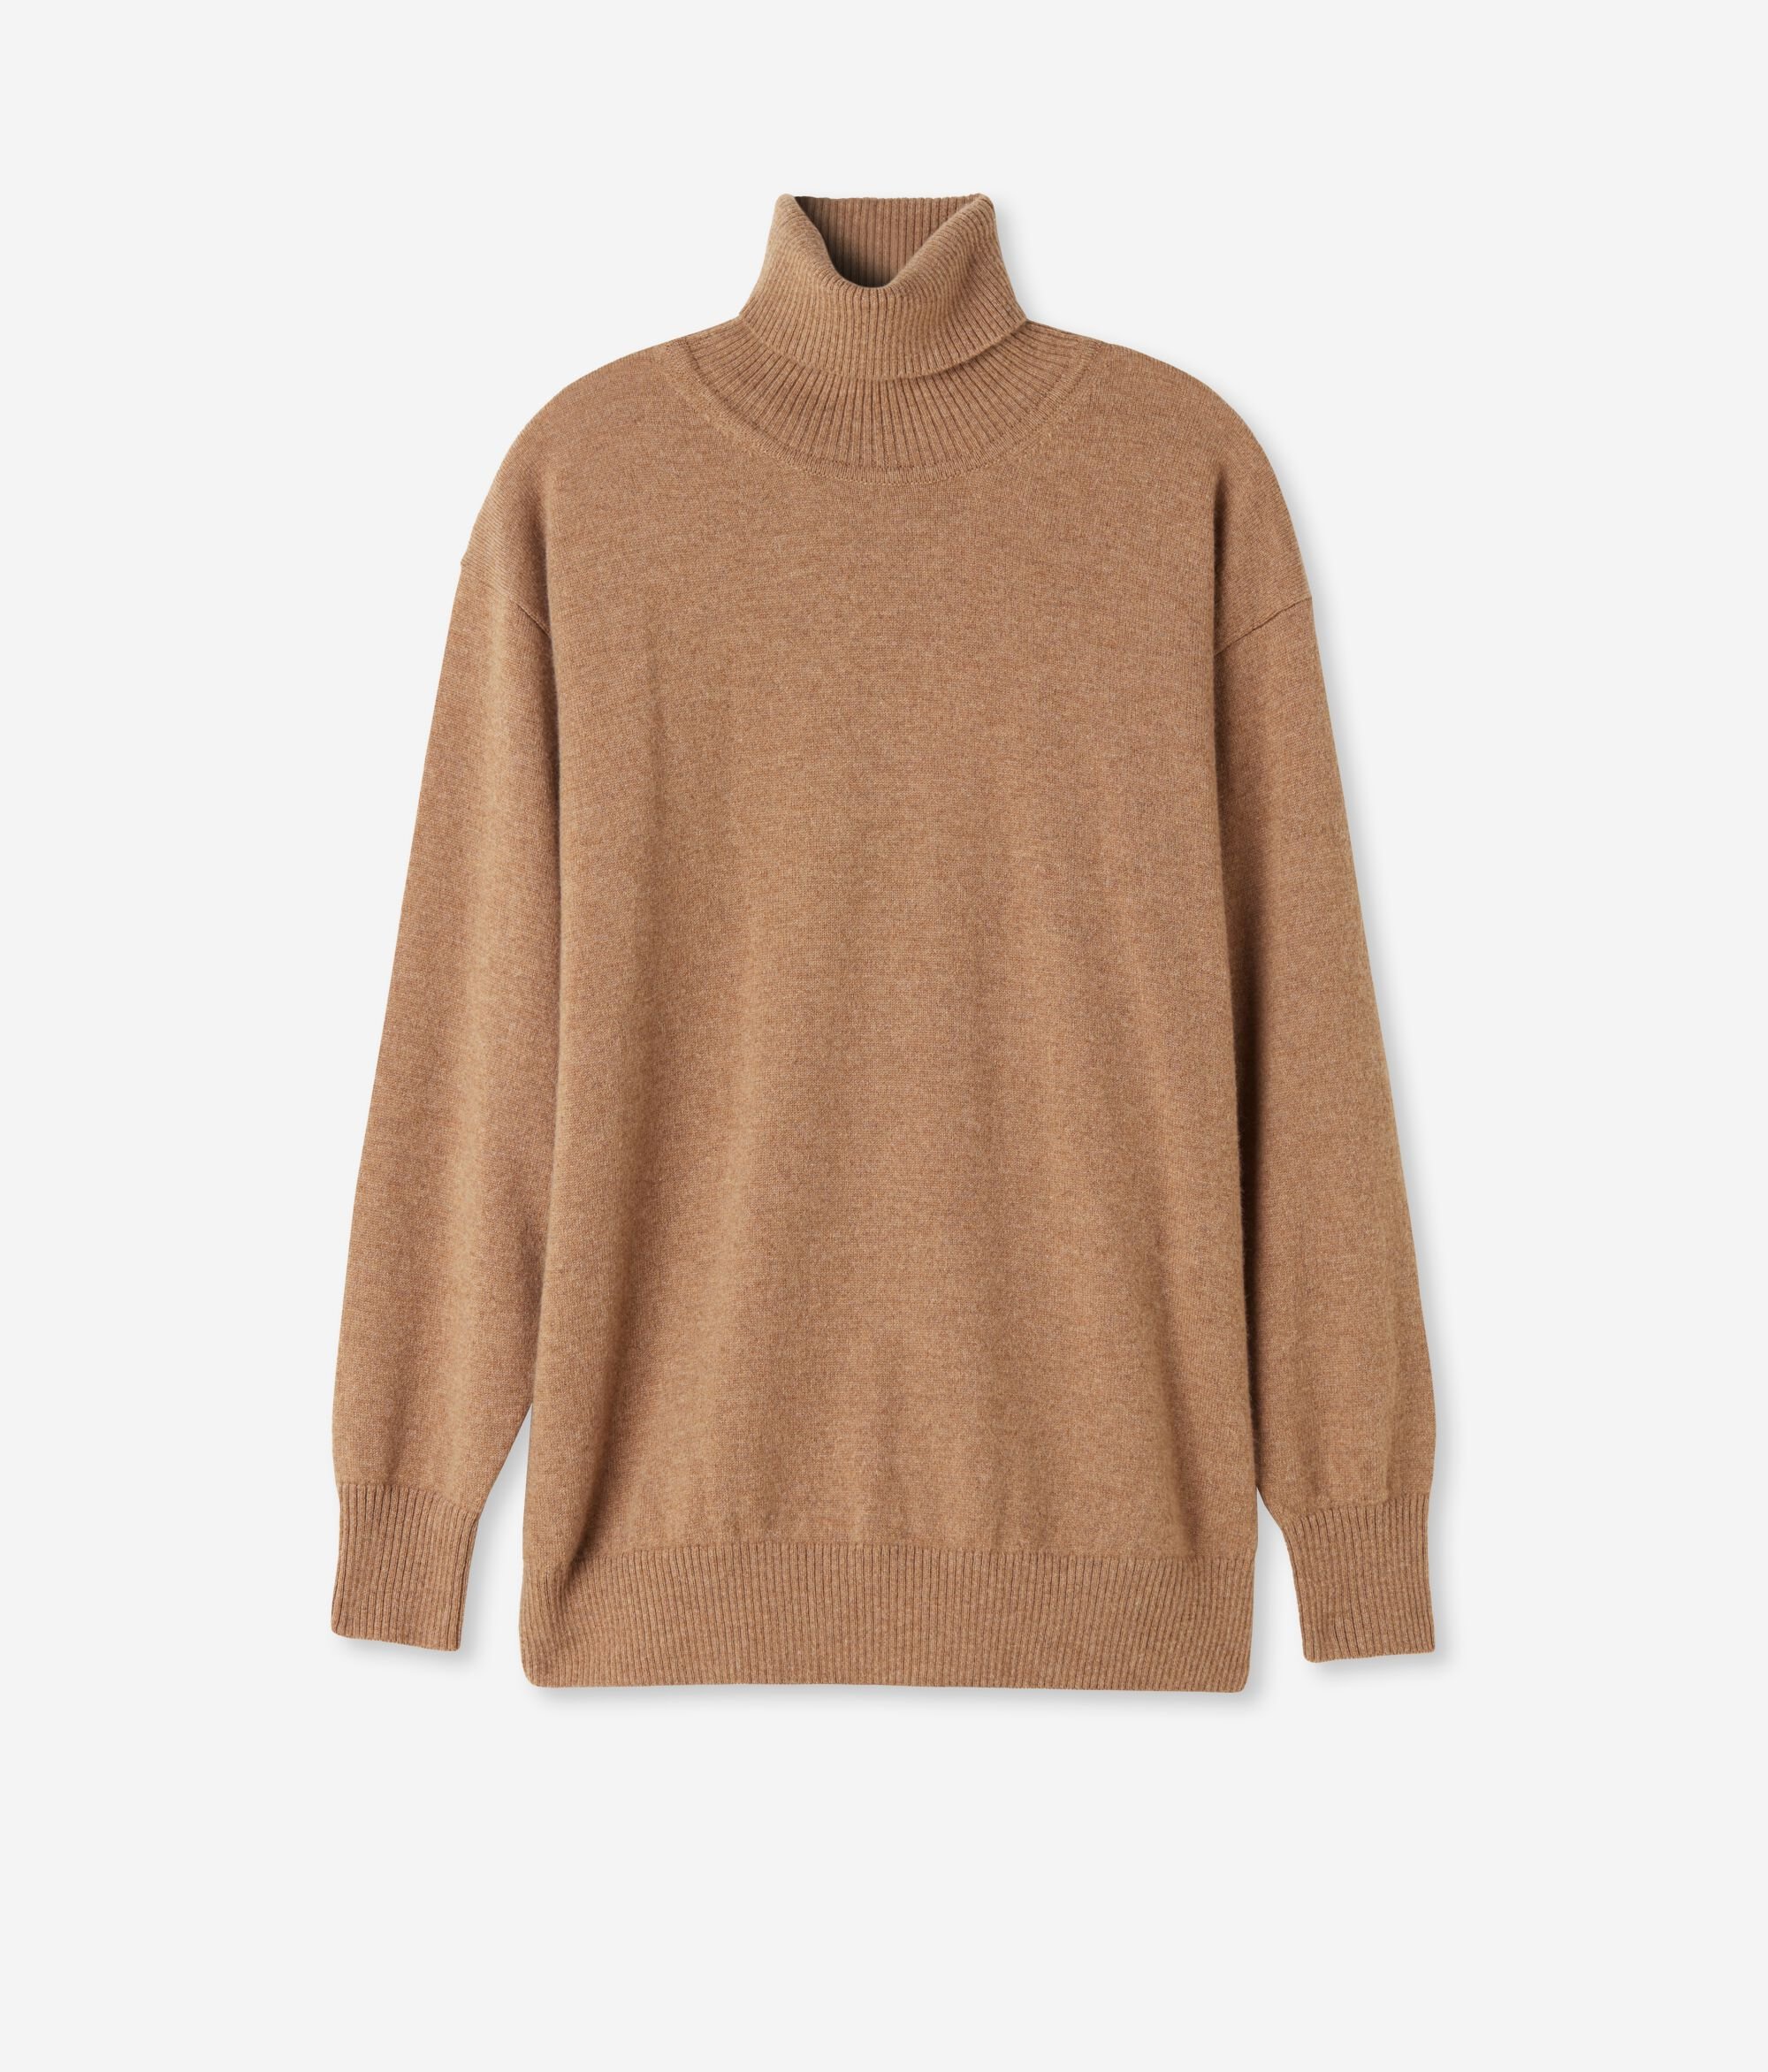 Ultrasoft Cashmere Turtleneck Sweater with Slits